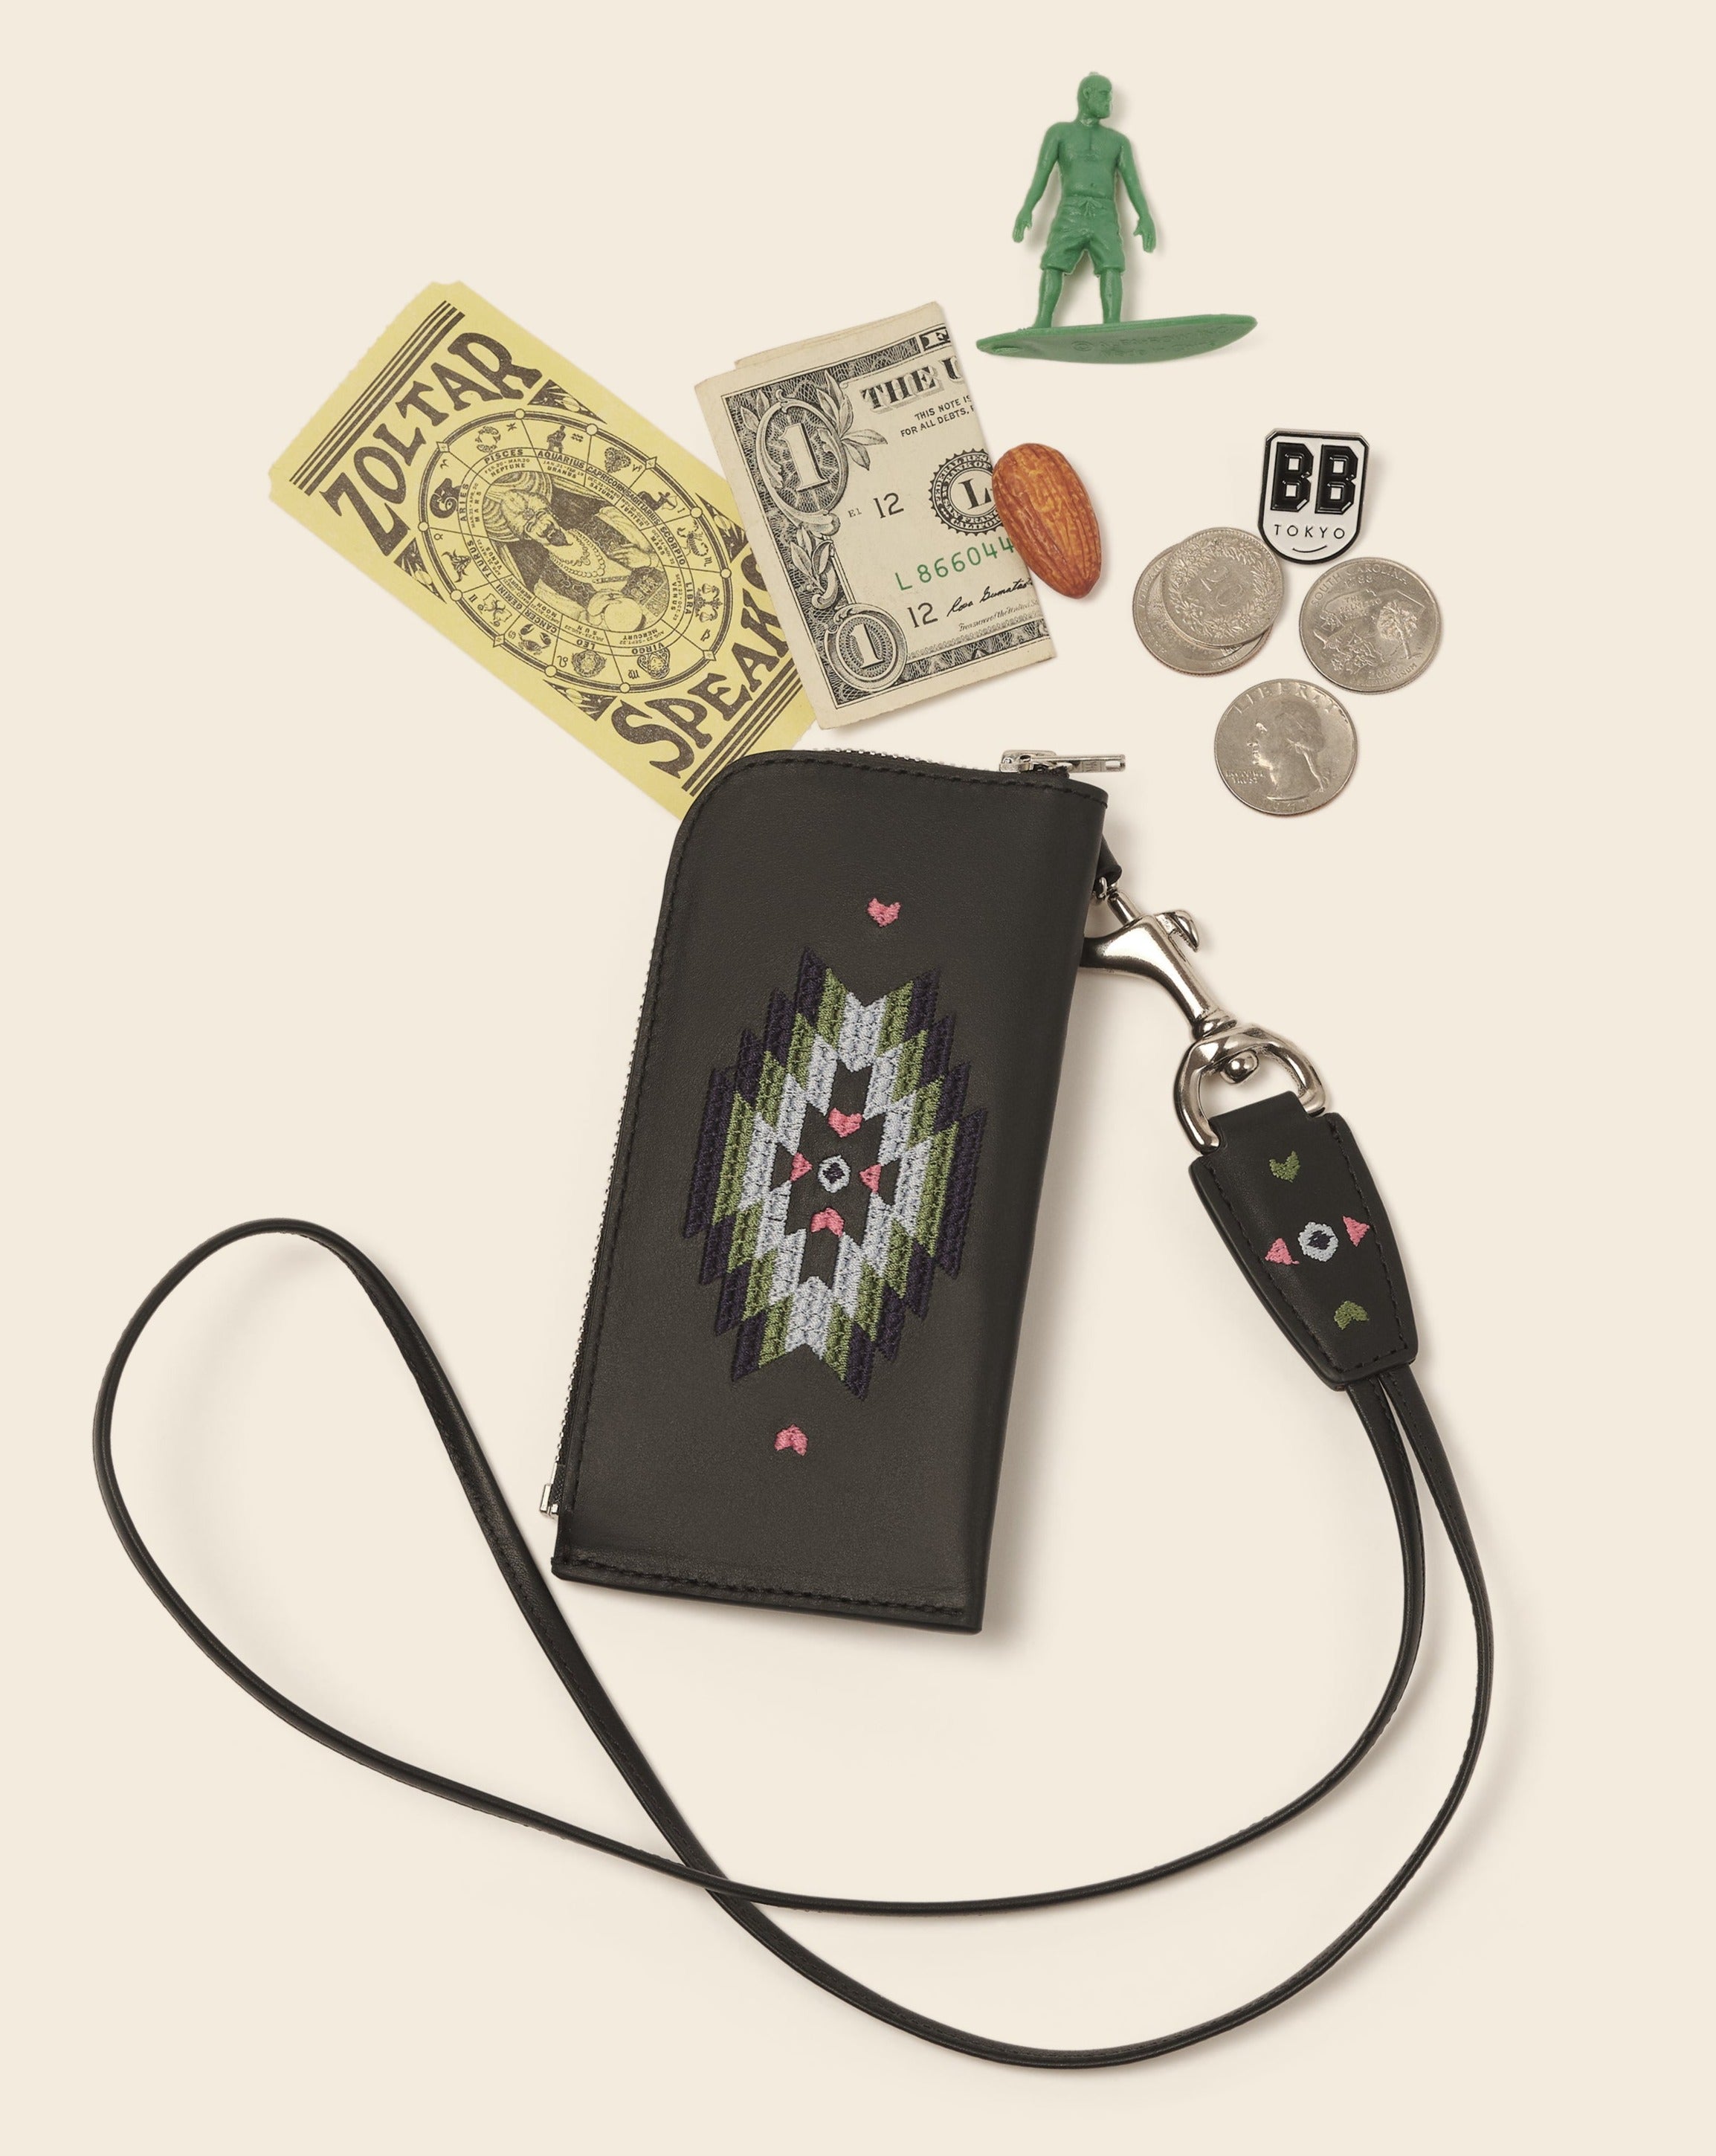 COOK + DAKOTA - Zipped card holder and carabiner necklace - Black leather & bandana navy